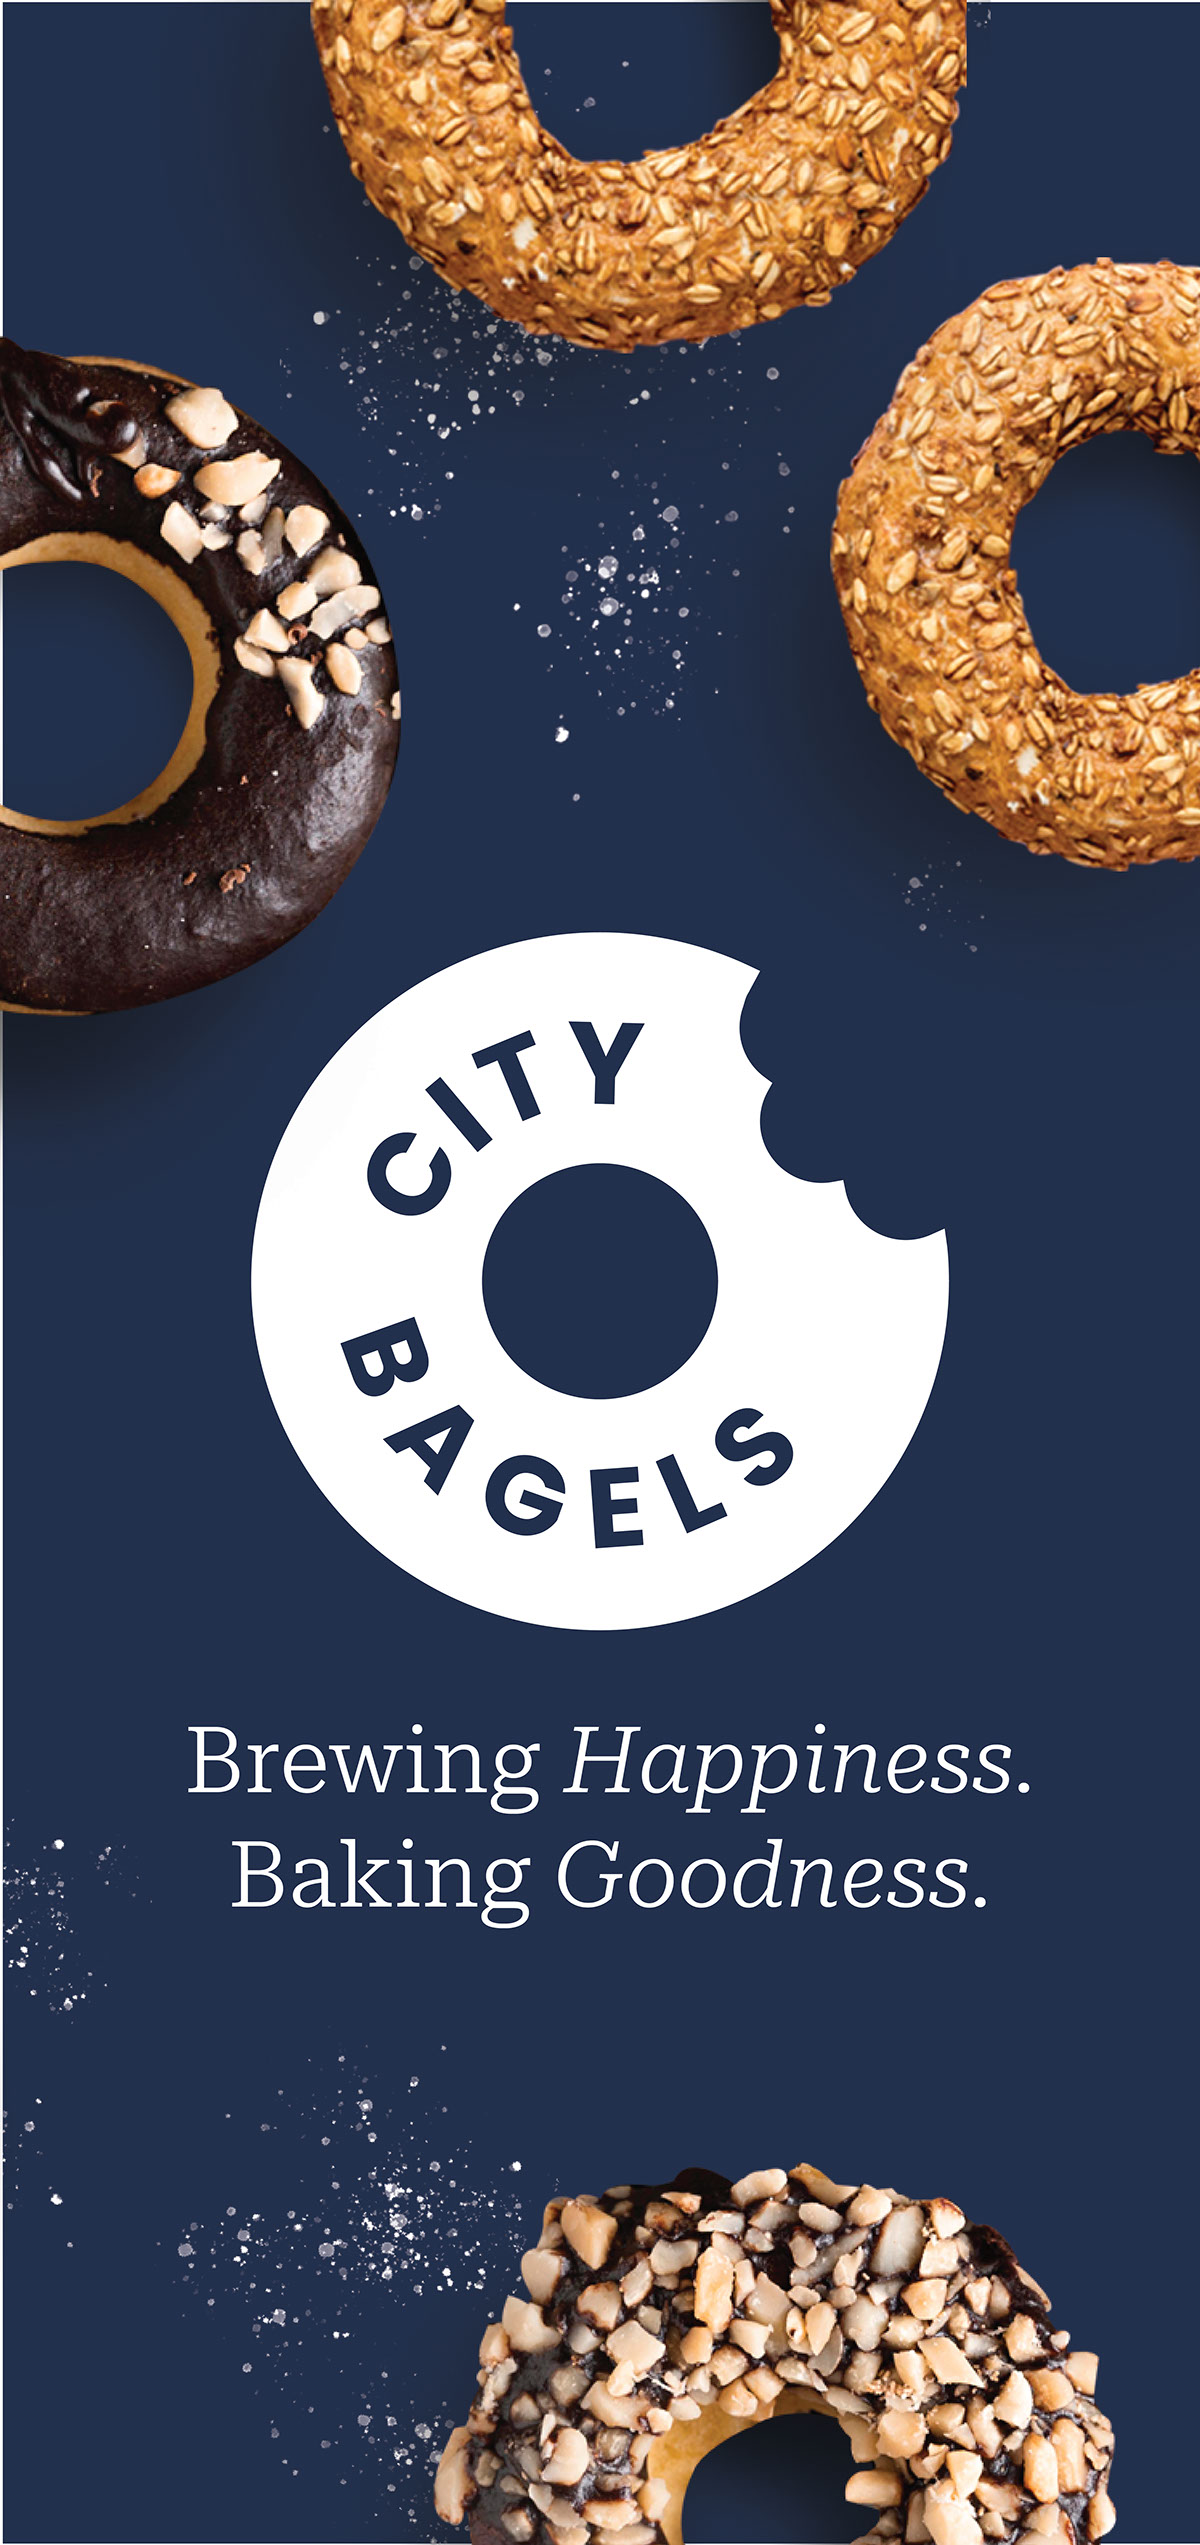 City Bagels Process Book rendition image